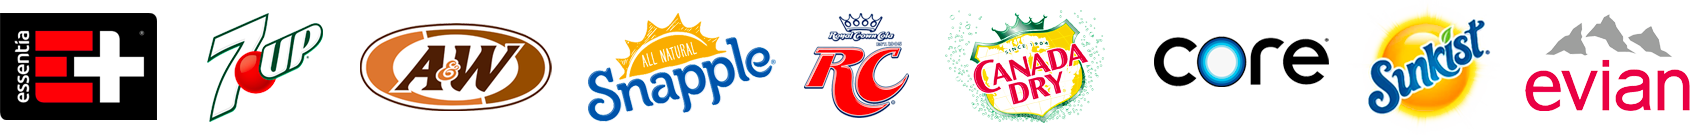 Riverside Refreshments brand logos